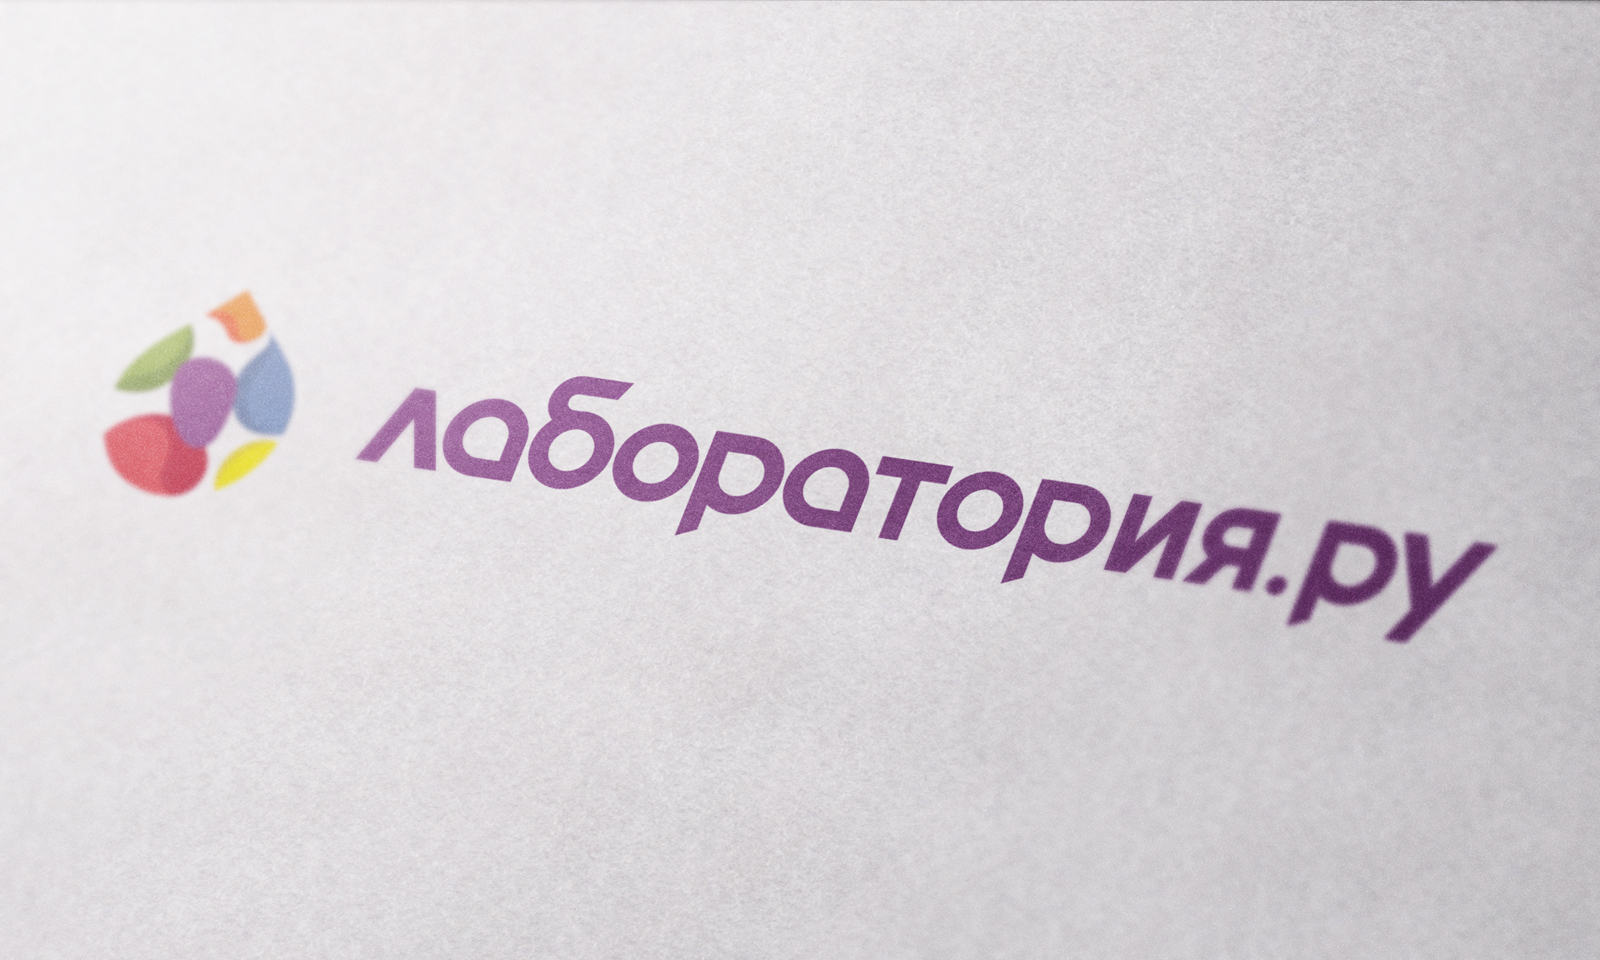 Логотип сети "Лаборатория.ру"